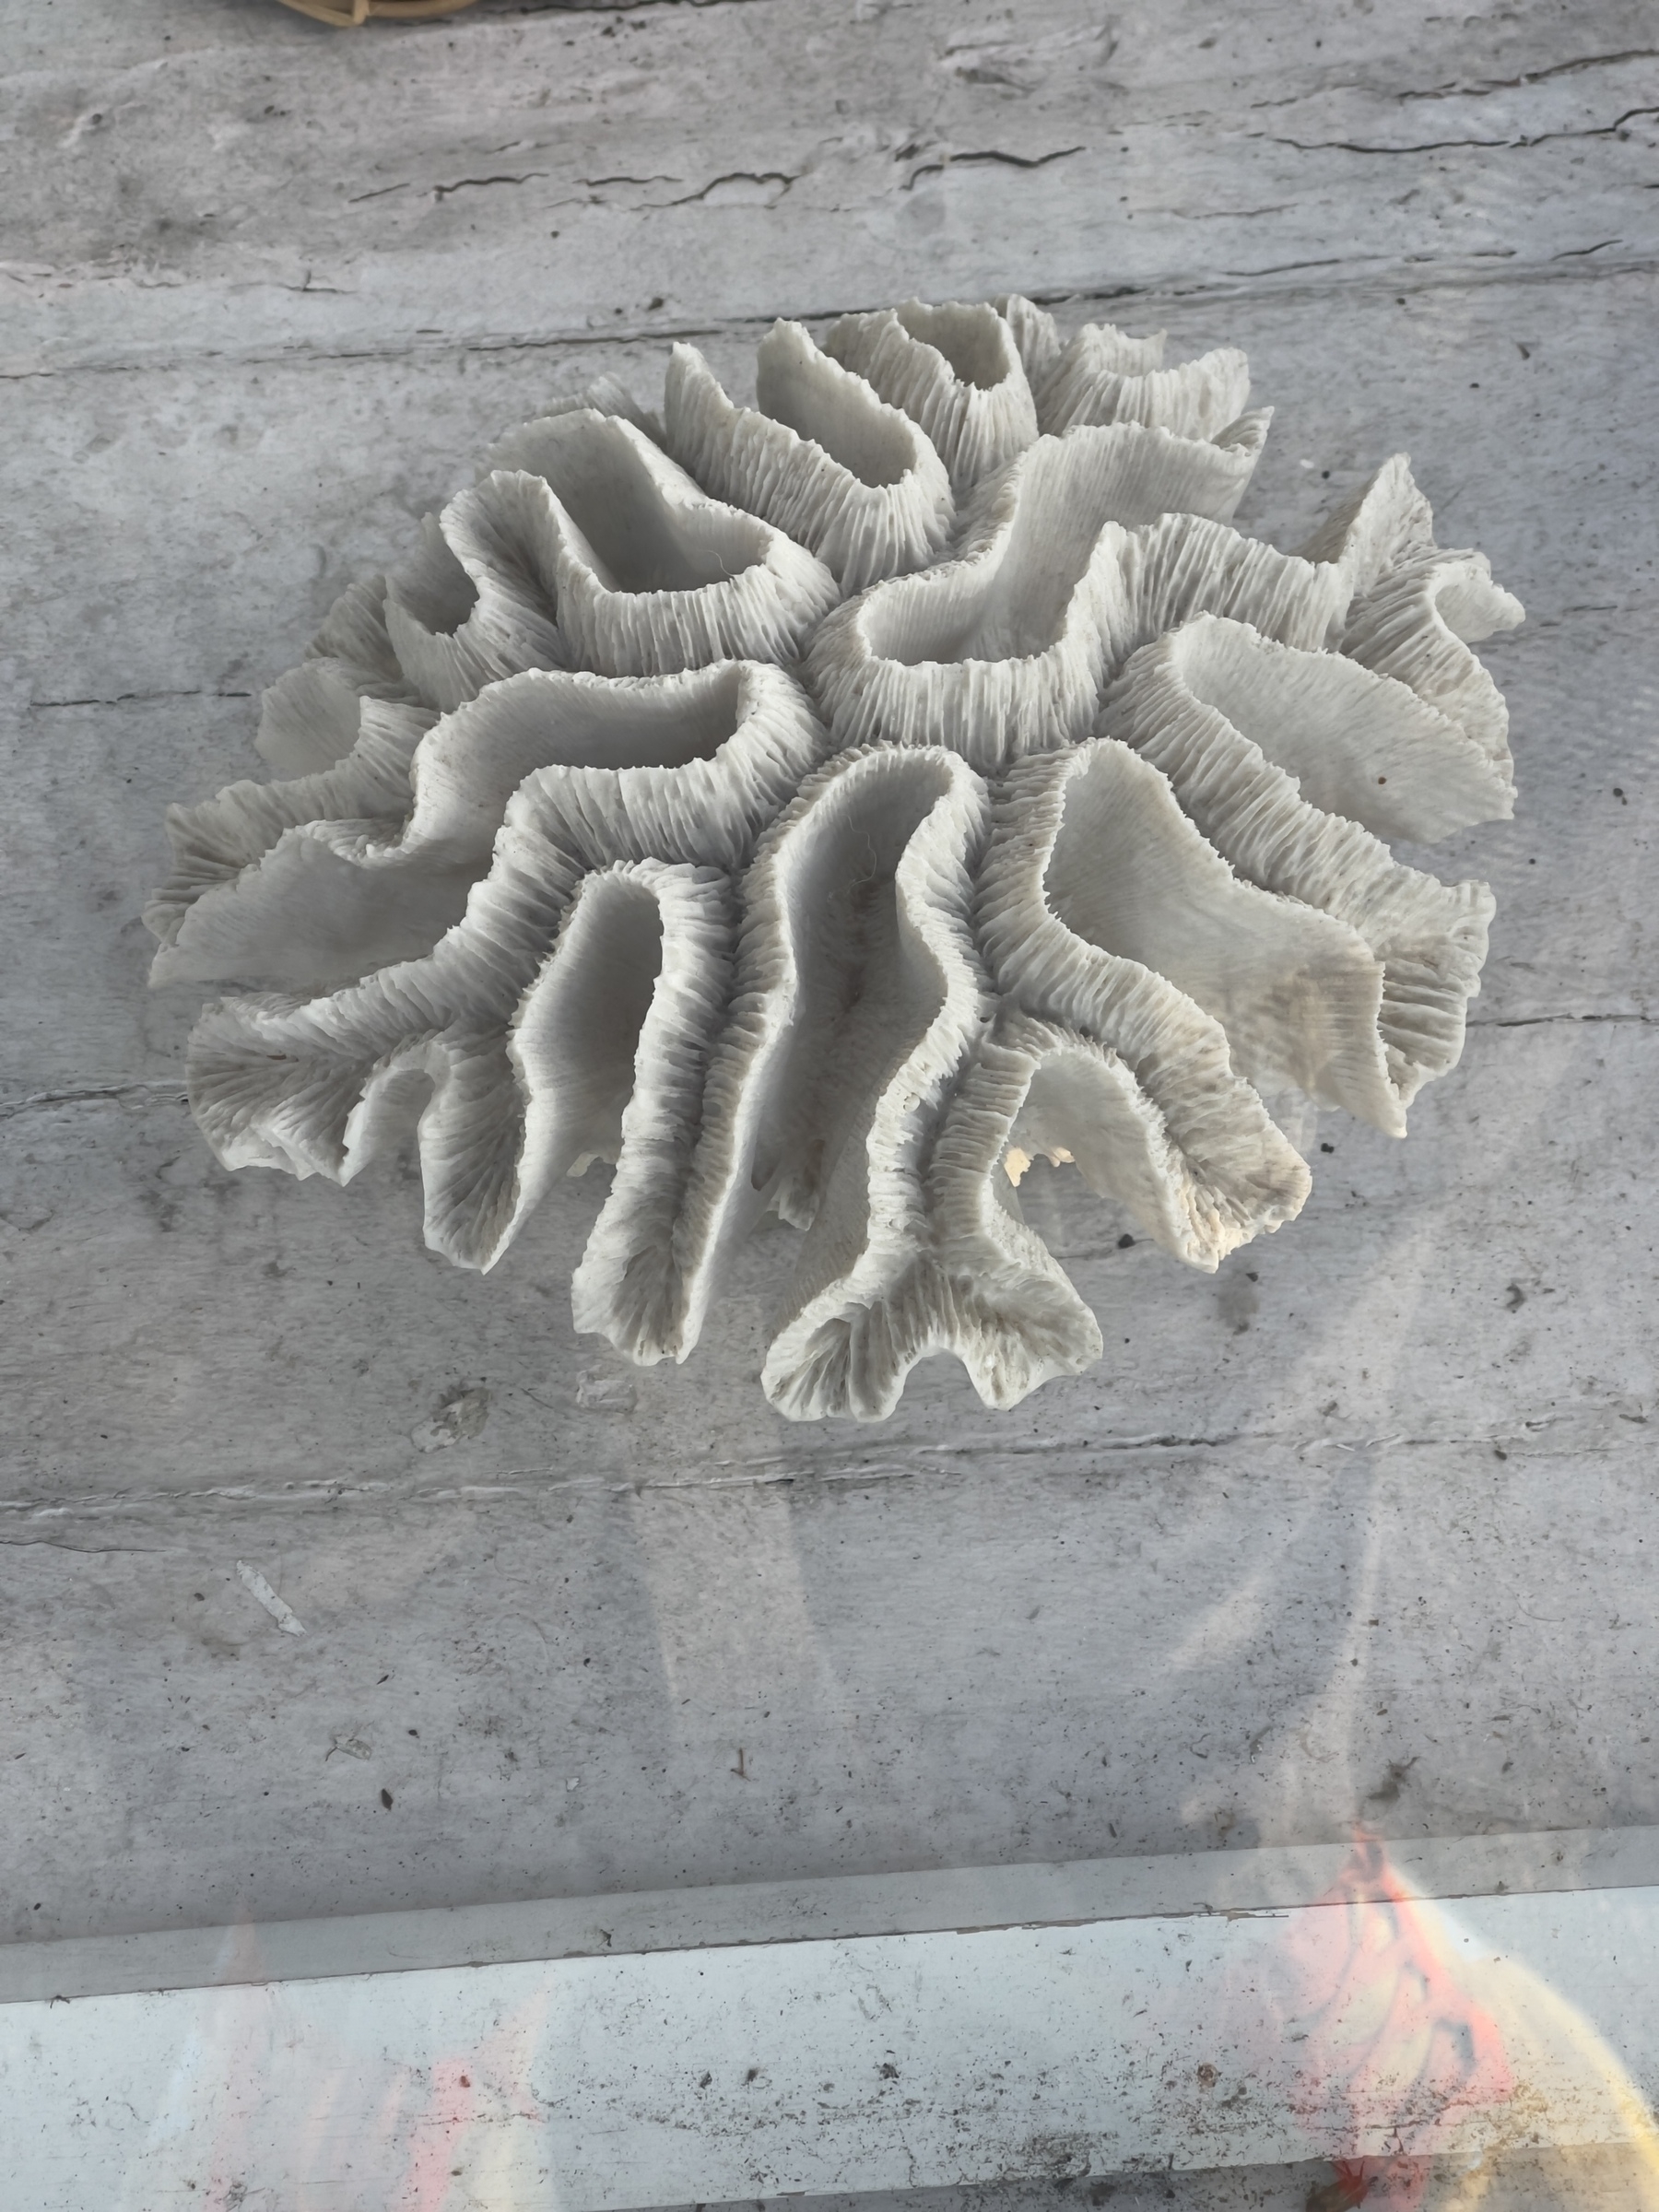 Brain coral in a shop window.